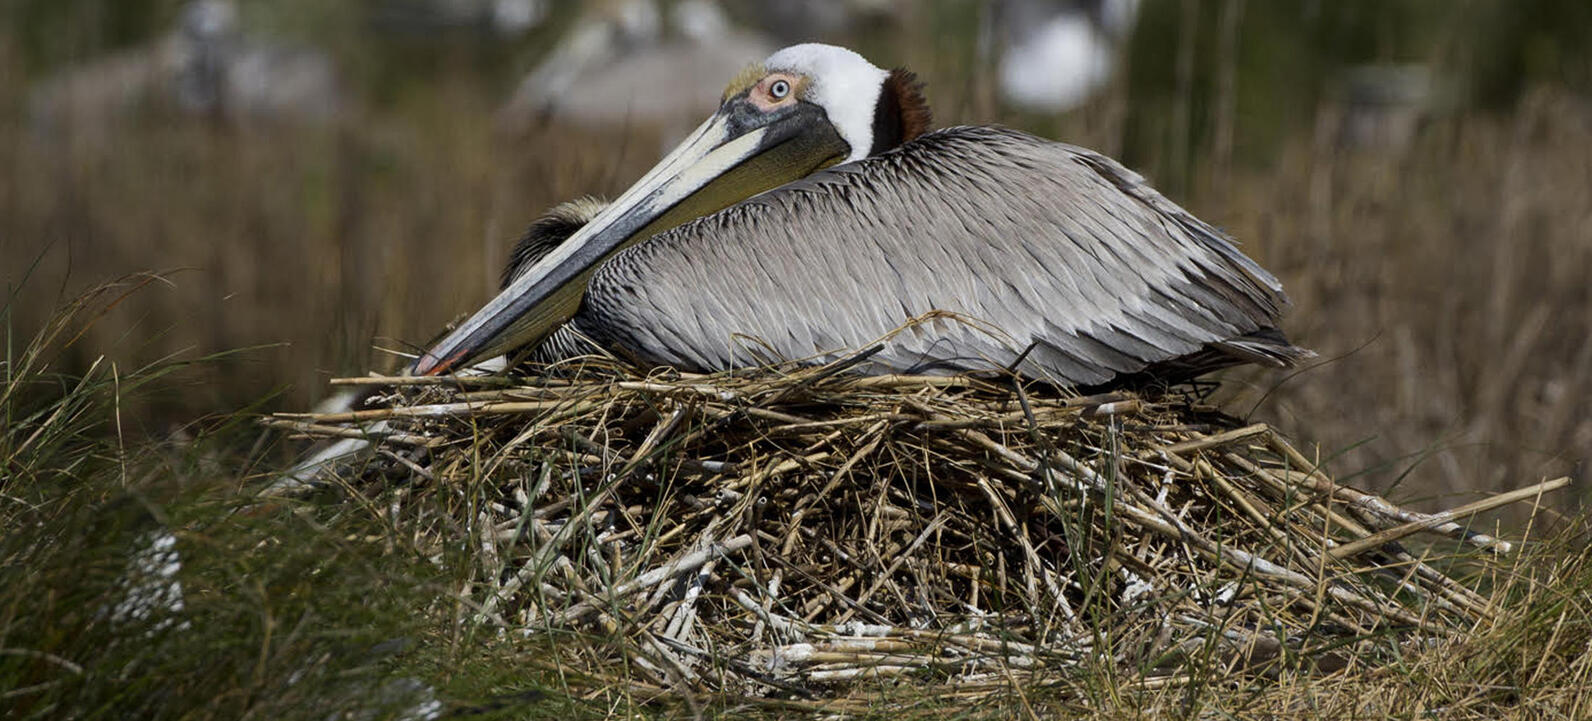 A nesting pelican.